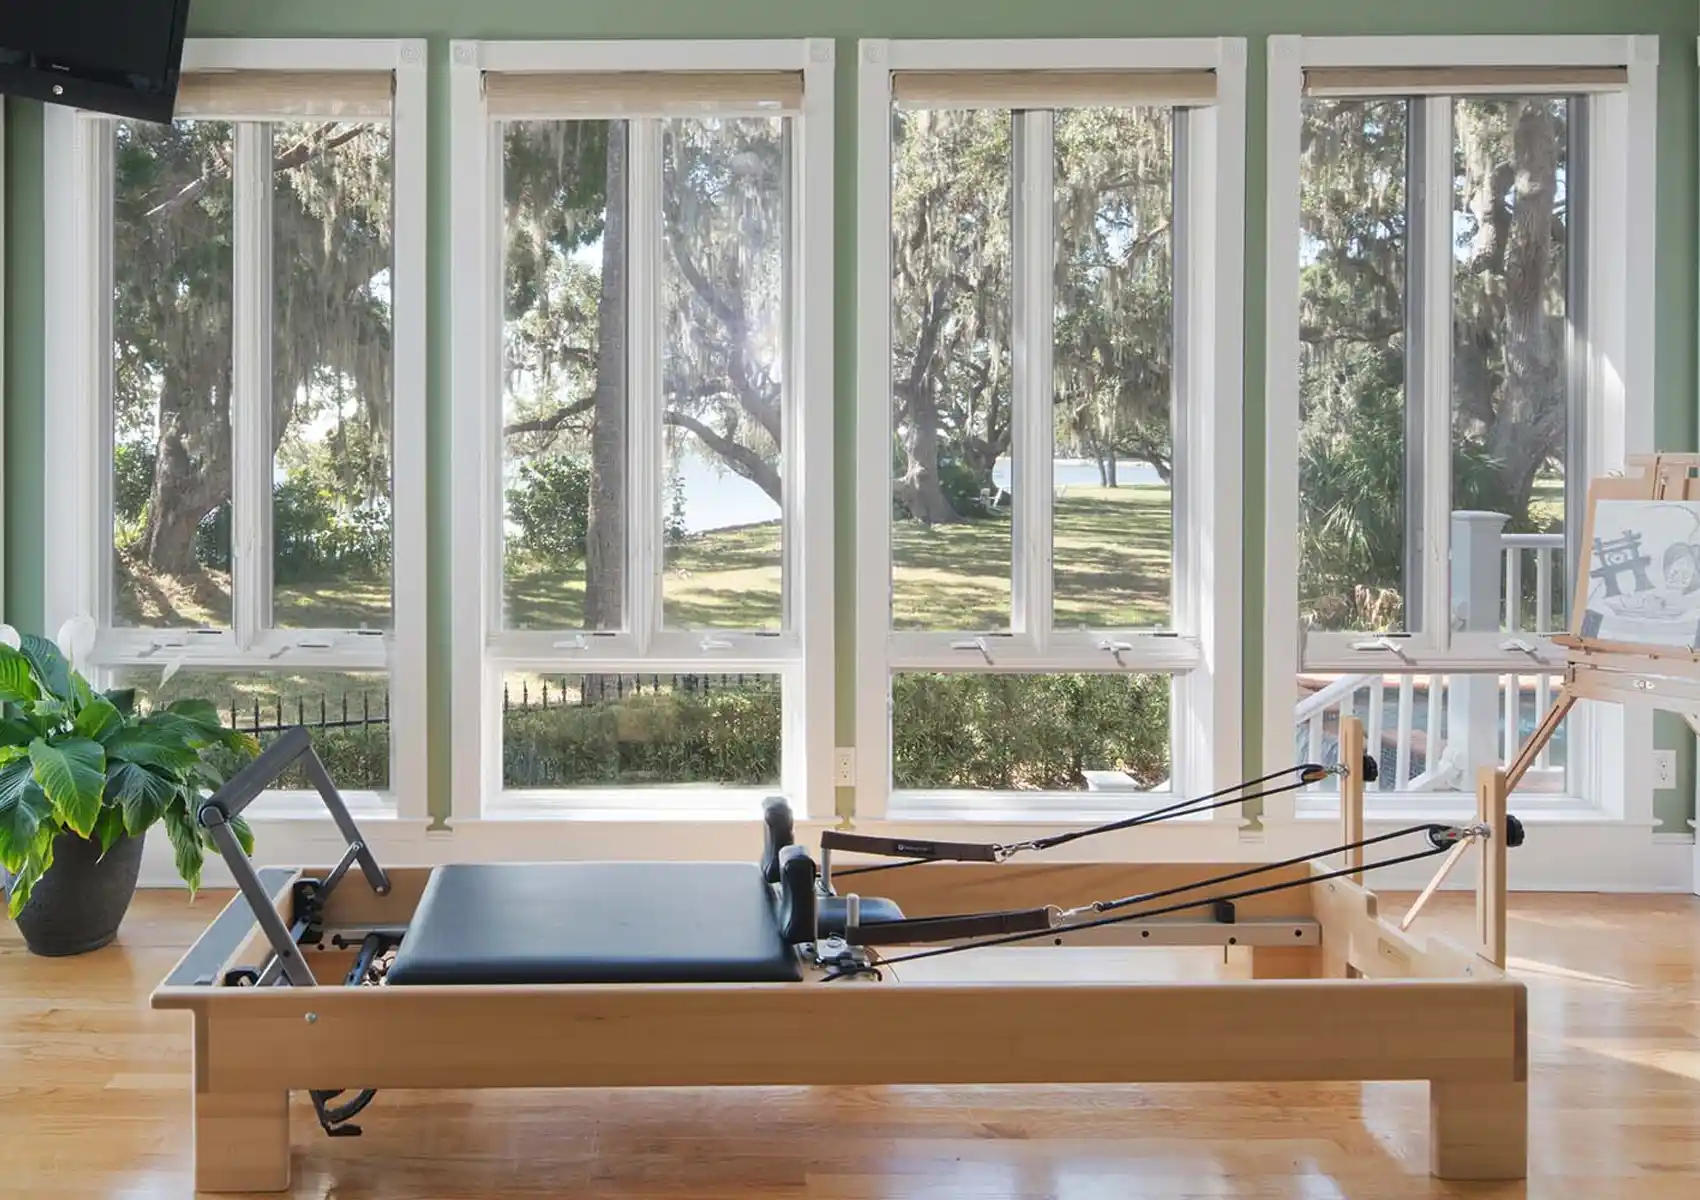 sunroom home gym, wood floors, exercise equipment, floor to ceiling windows, green walls